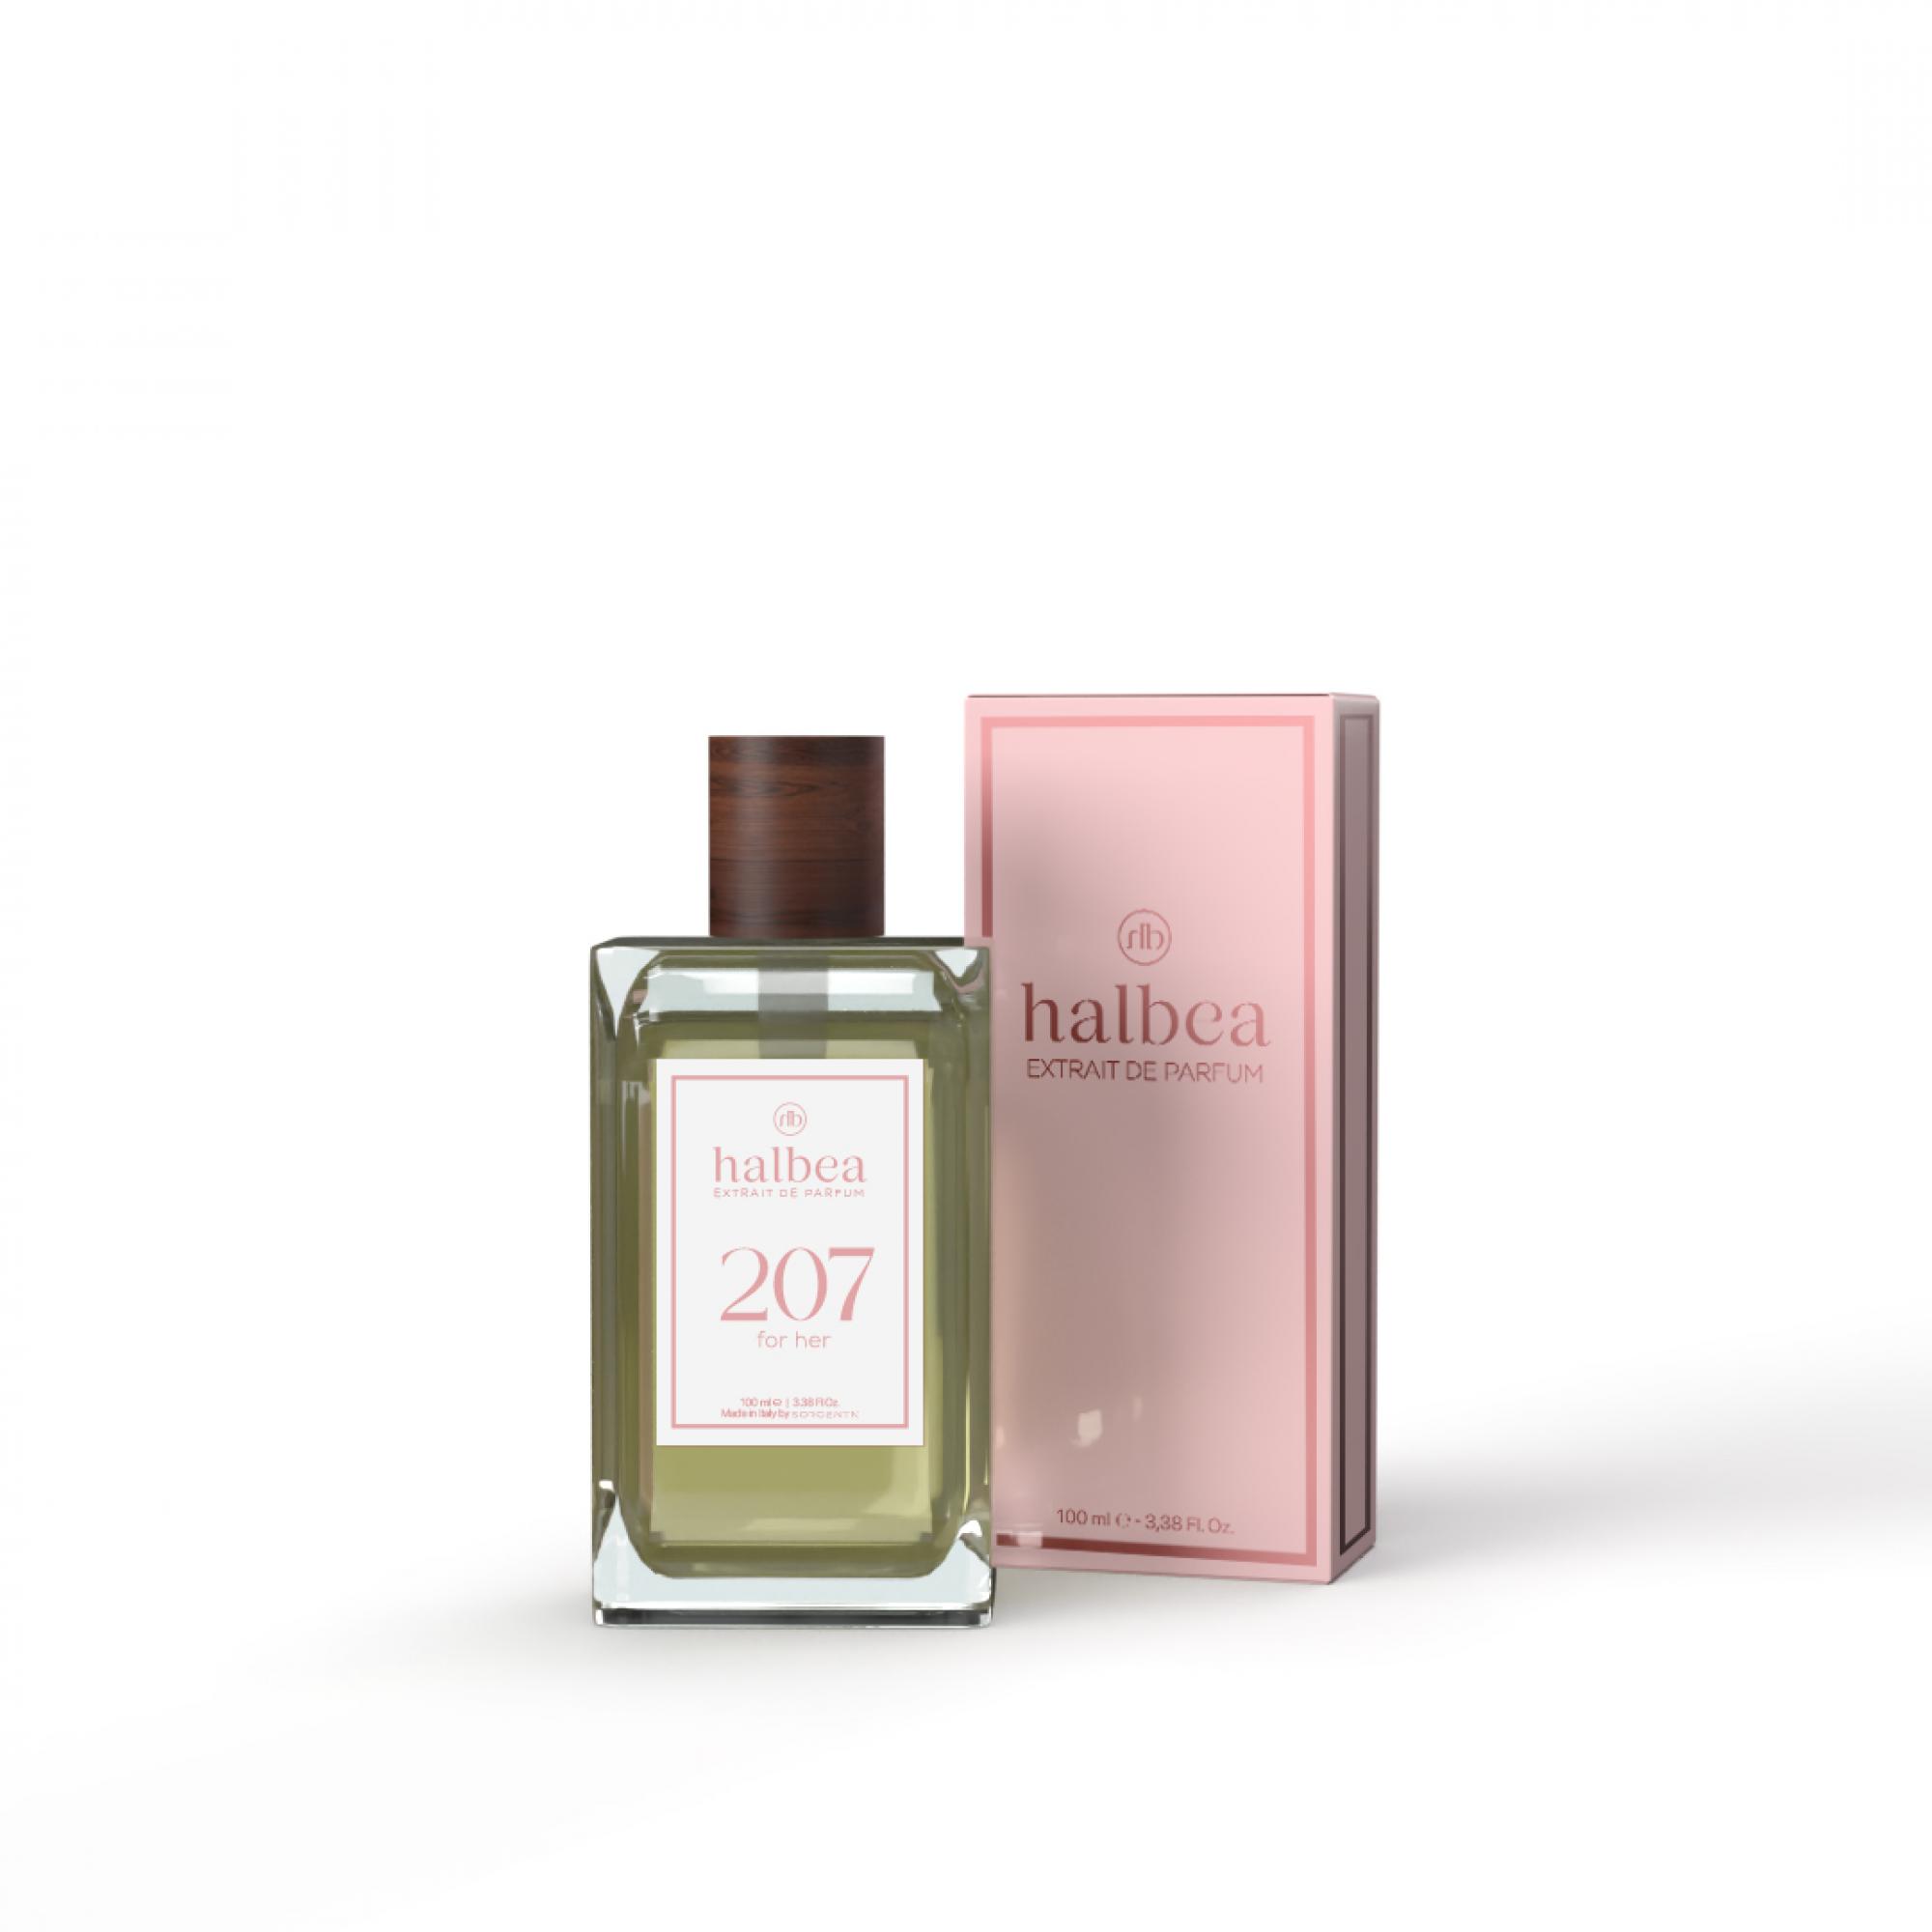 Halbea Parfum Nr. 207 insp. by Lolita Lempicka Sorgenta 100ml